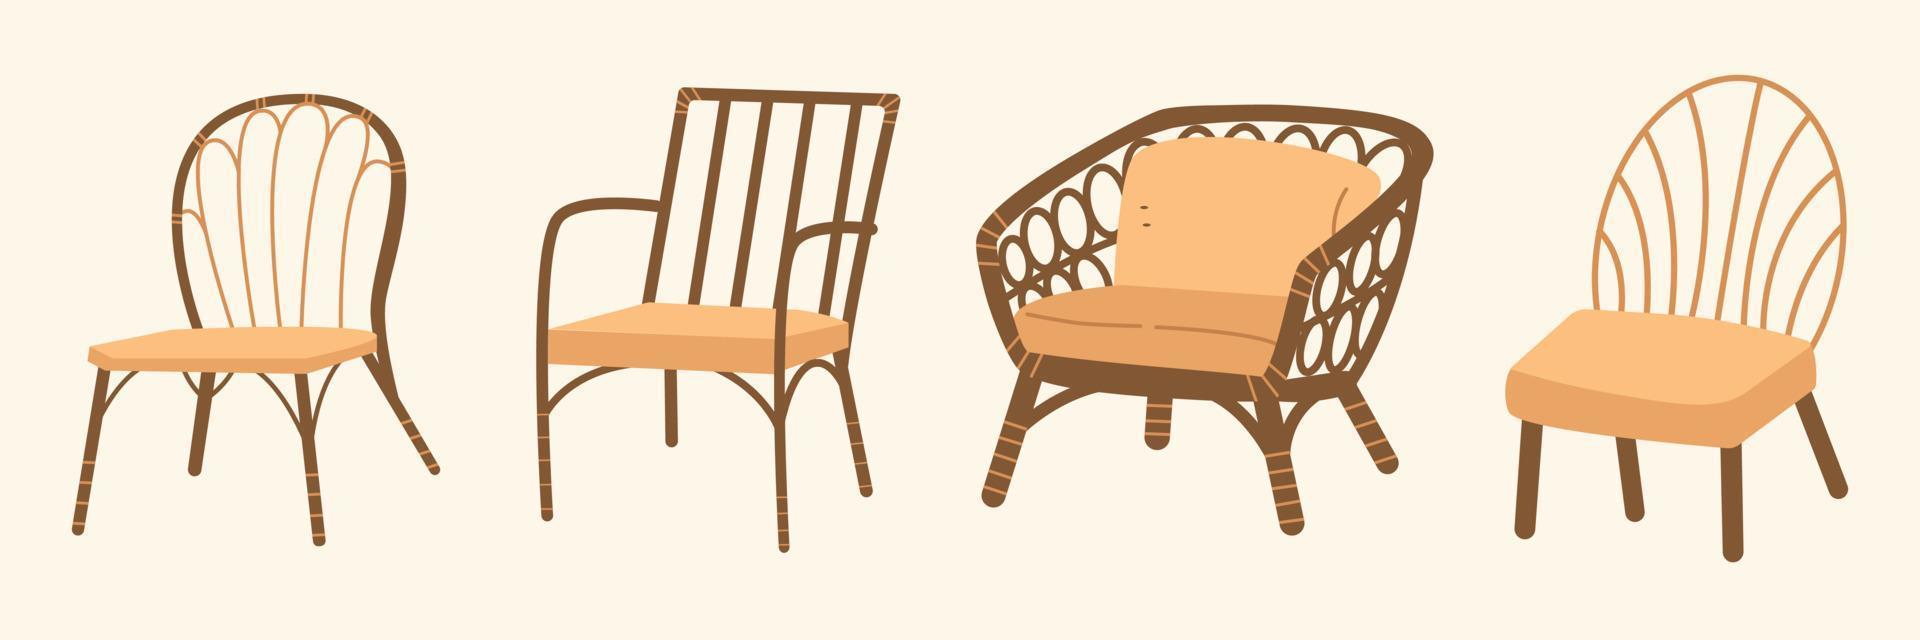 vintagemöbler i boho designstil. bohemisk illustration för designelement. antika stolar i klassisk stil vektor